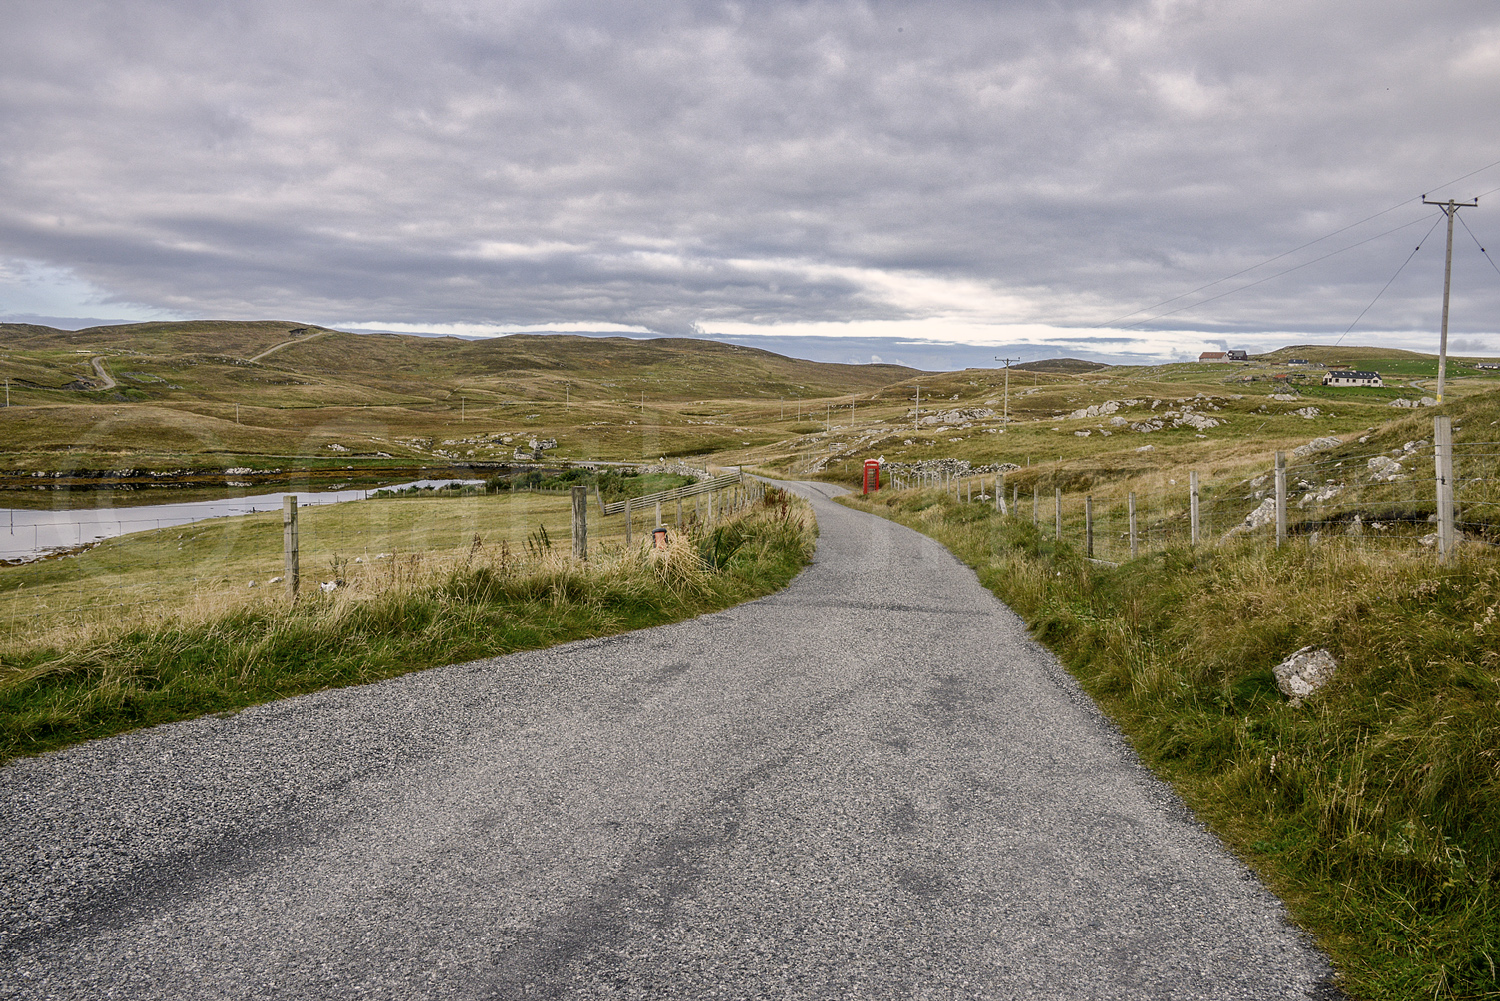 The nearest phone, Burrastow, Shetland